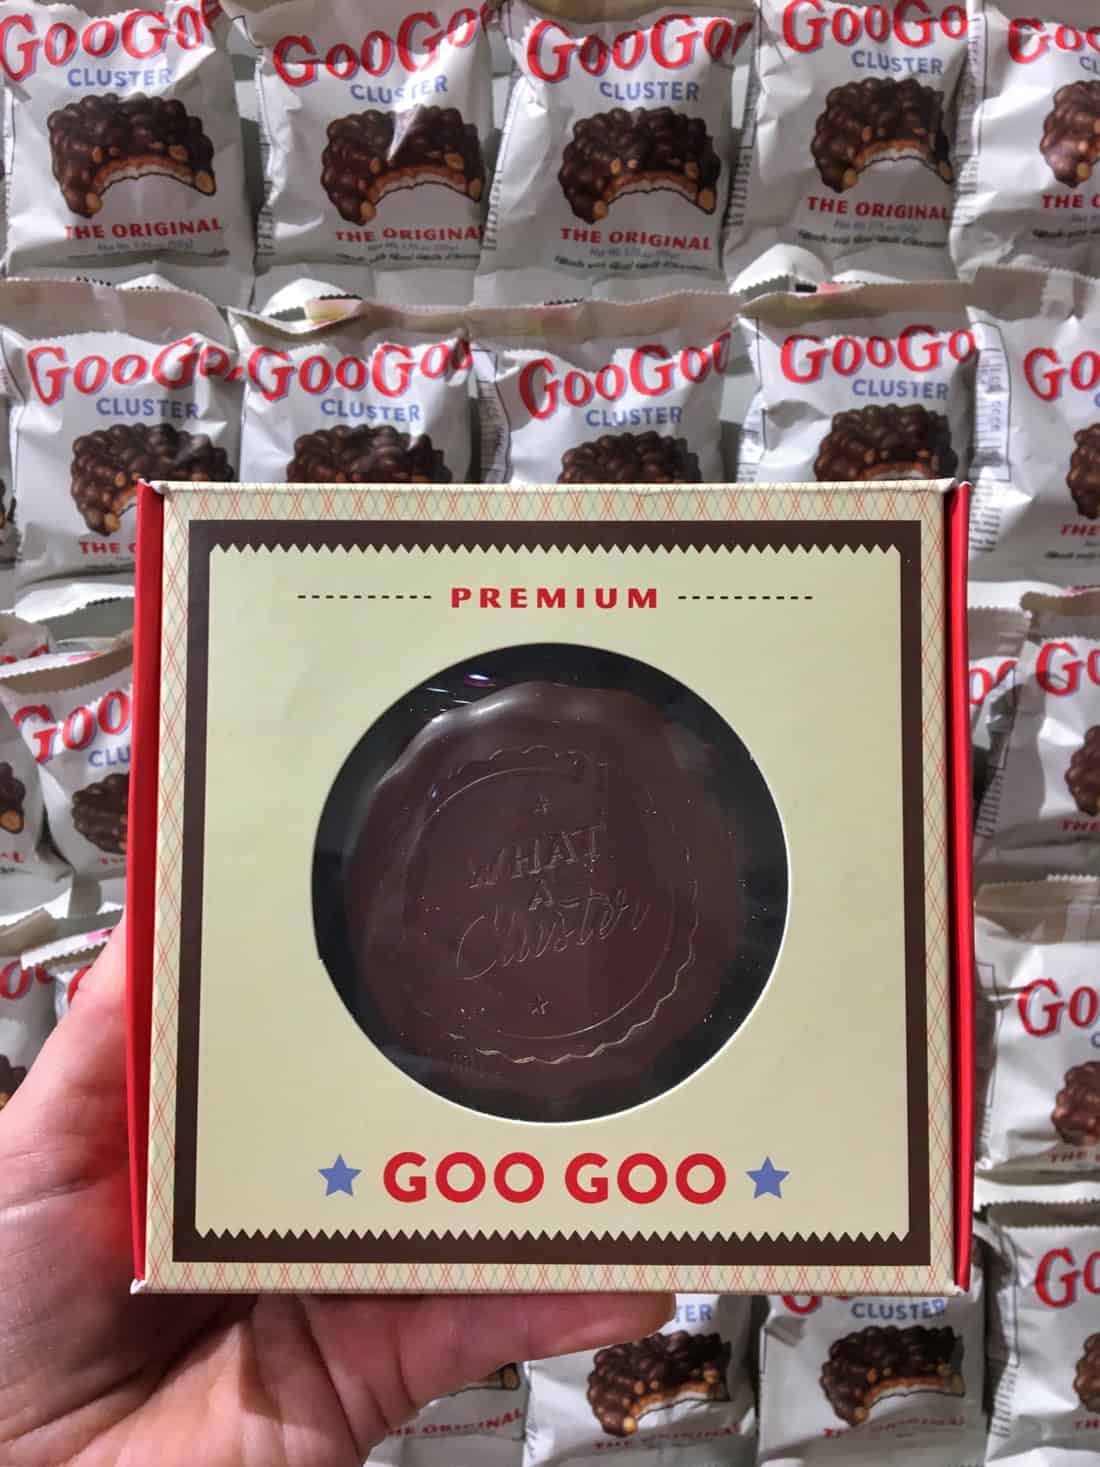 Make Your Own Goo Goo at the Goo Goo Cluster Chocolate Class